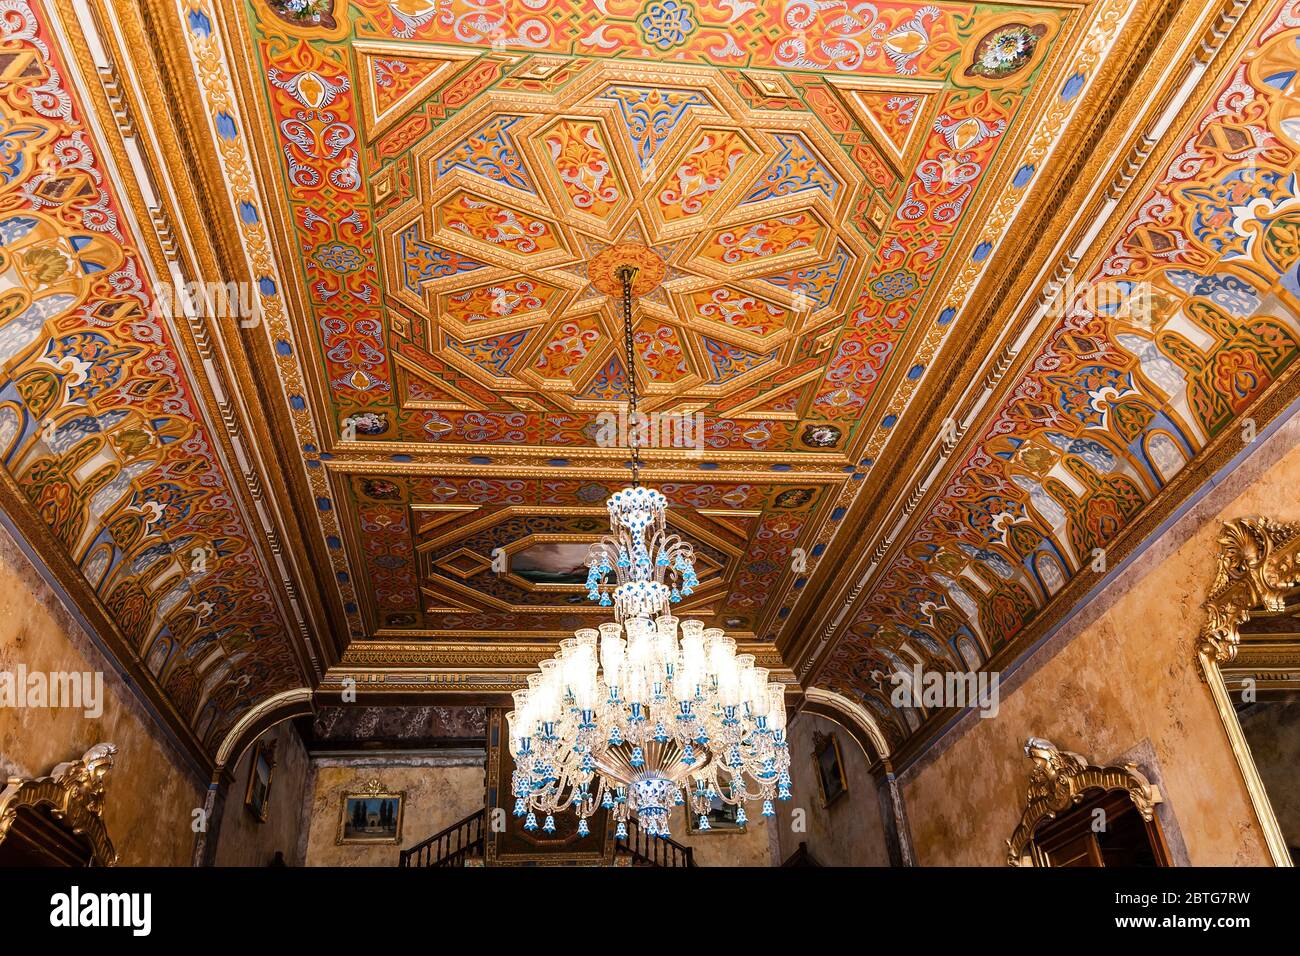 Ornate ceiling decoration in Beylerbeyi Palace, Istanbul Stock Photo